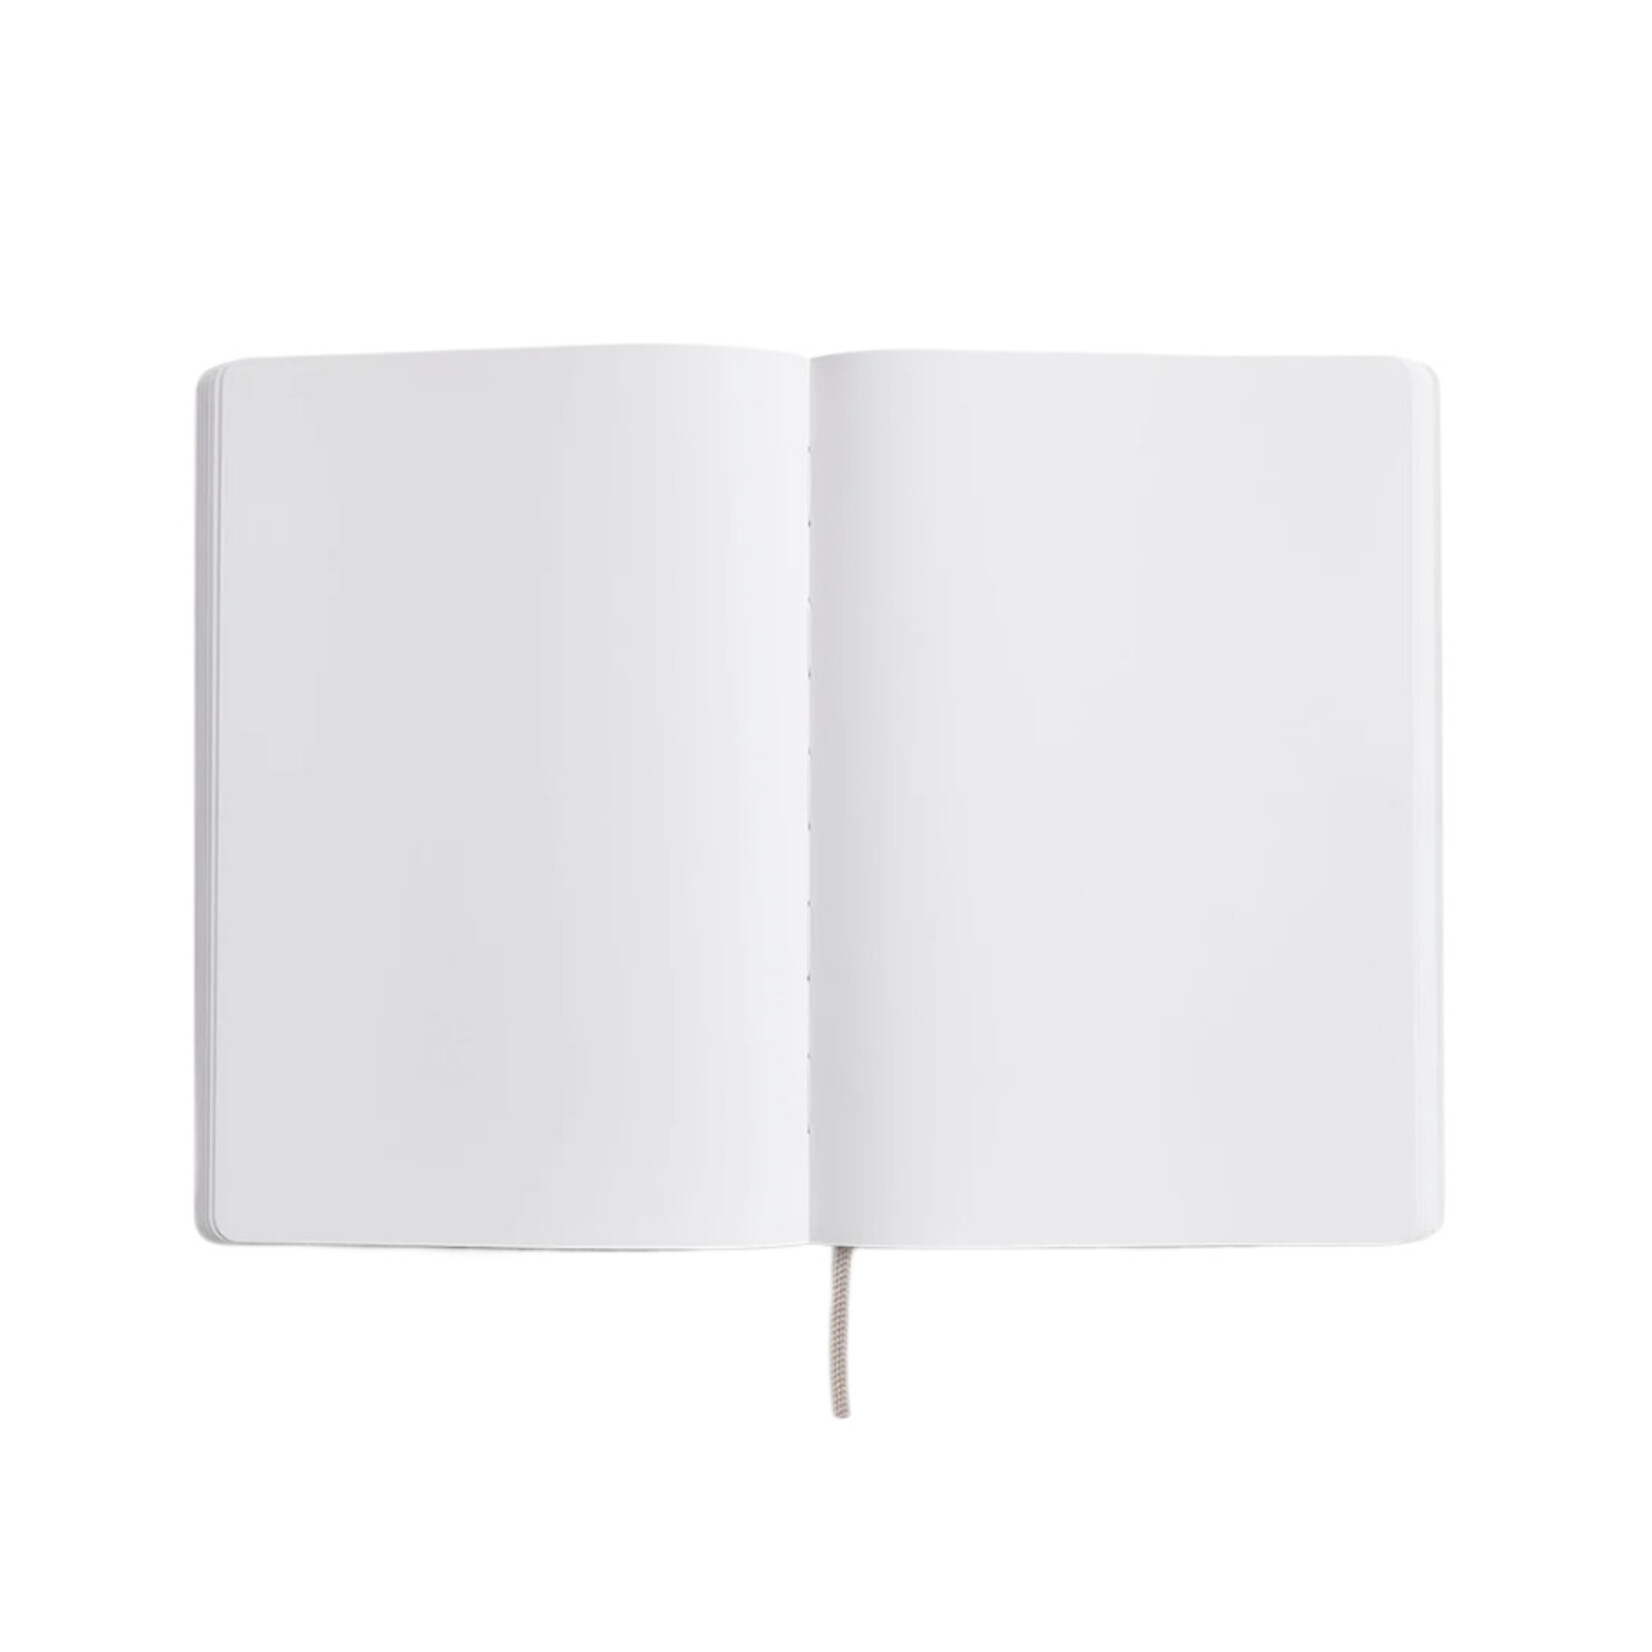 Karst Karst A5 Soft Cover Blank Notebook